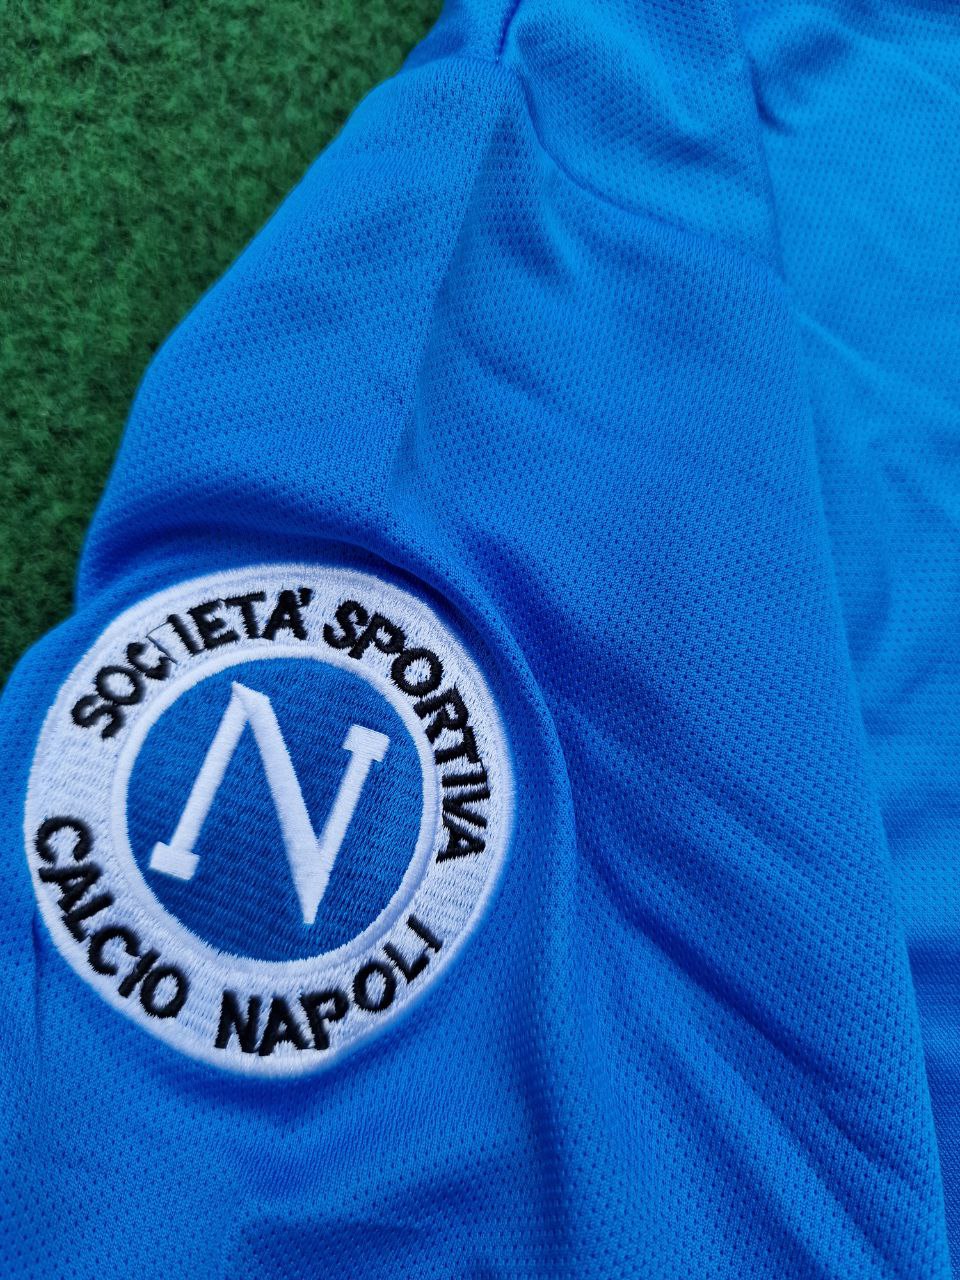 Napoli Retro Diego Armando Maradona Vintage Kollarinda Arma Football Maillot Maglia Jersey Trikot